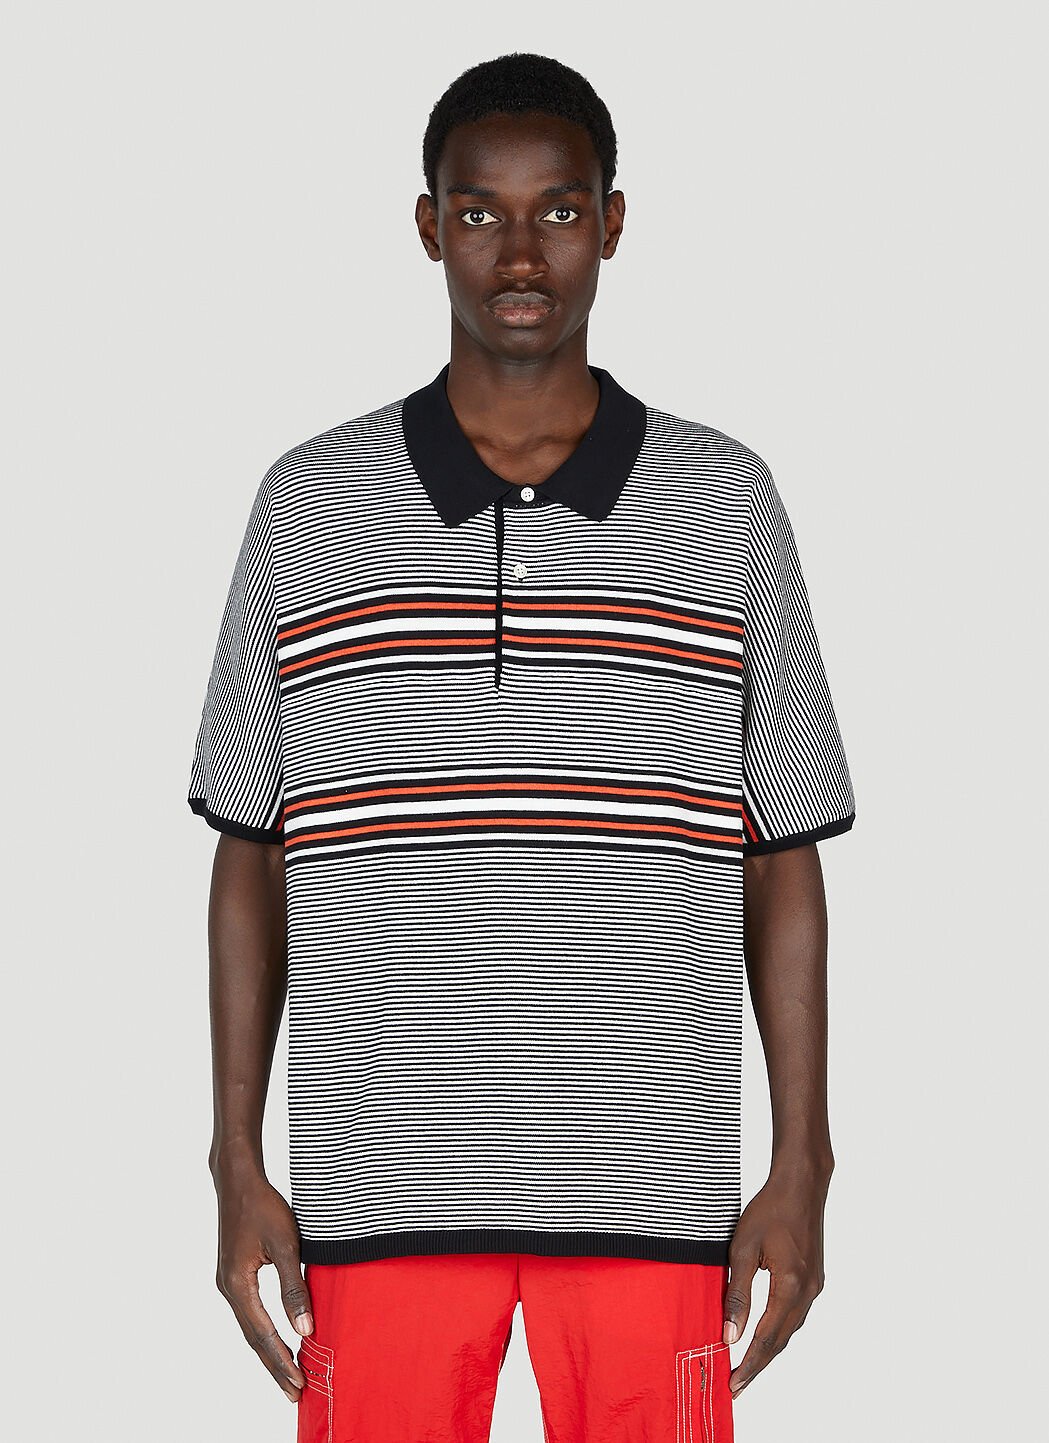 Brain Dead Striped Polo Shirt Multicolour bra0156015